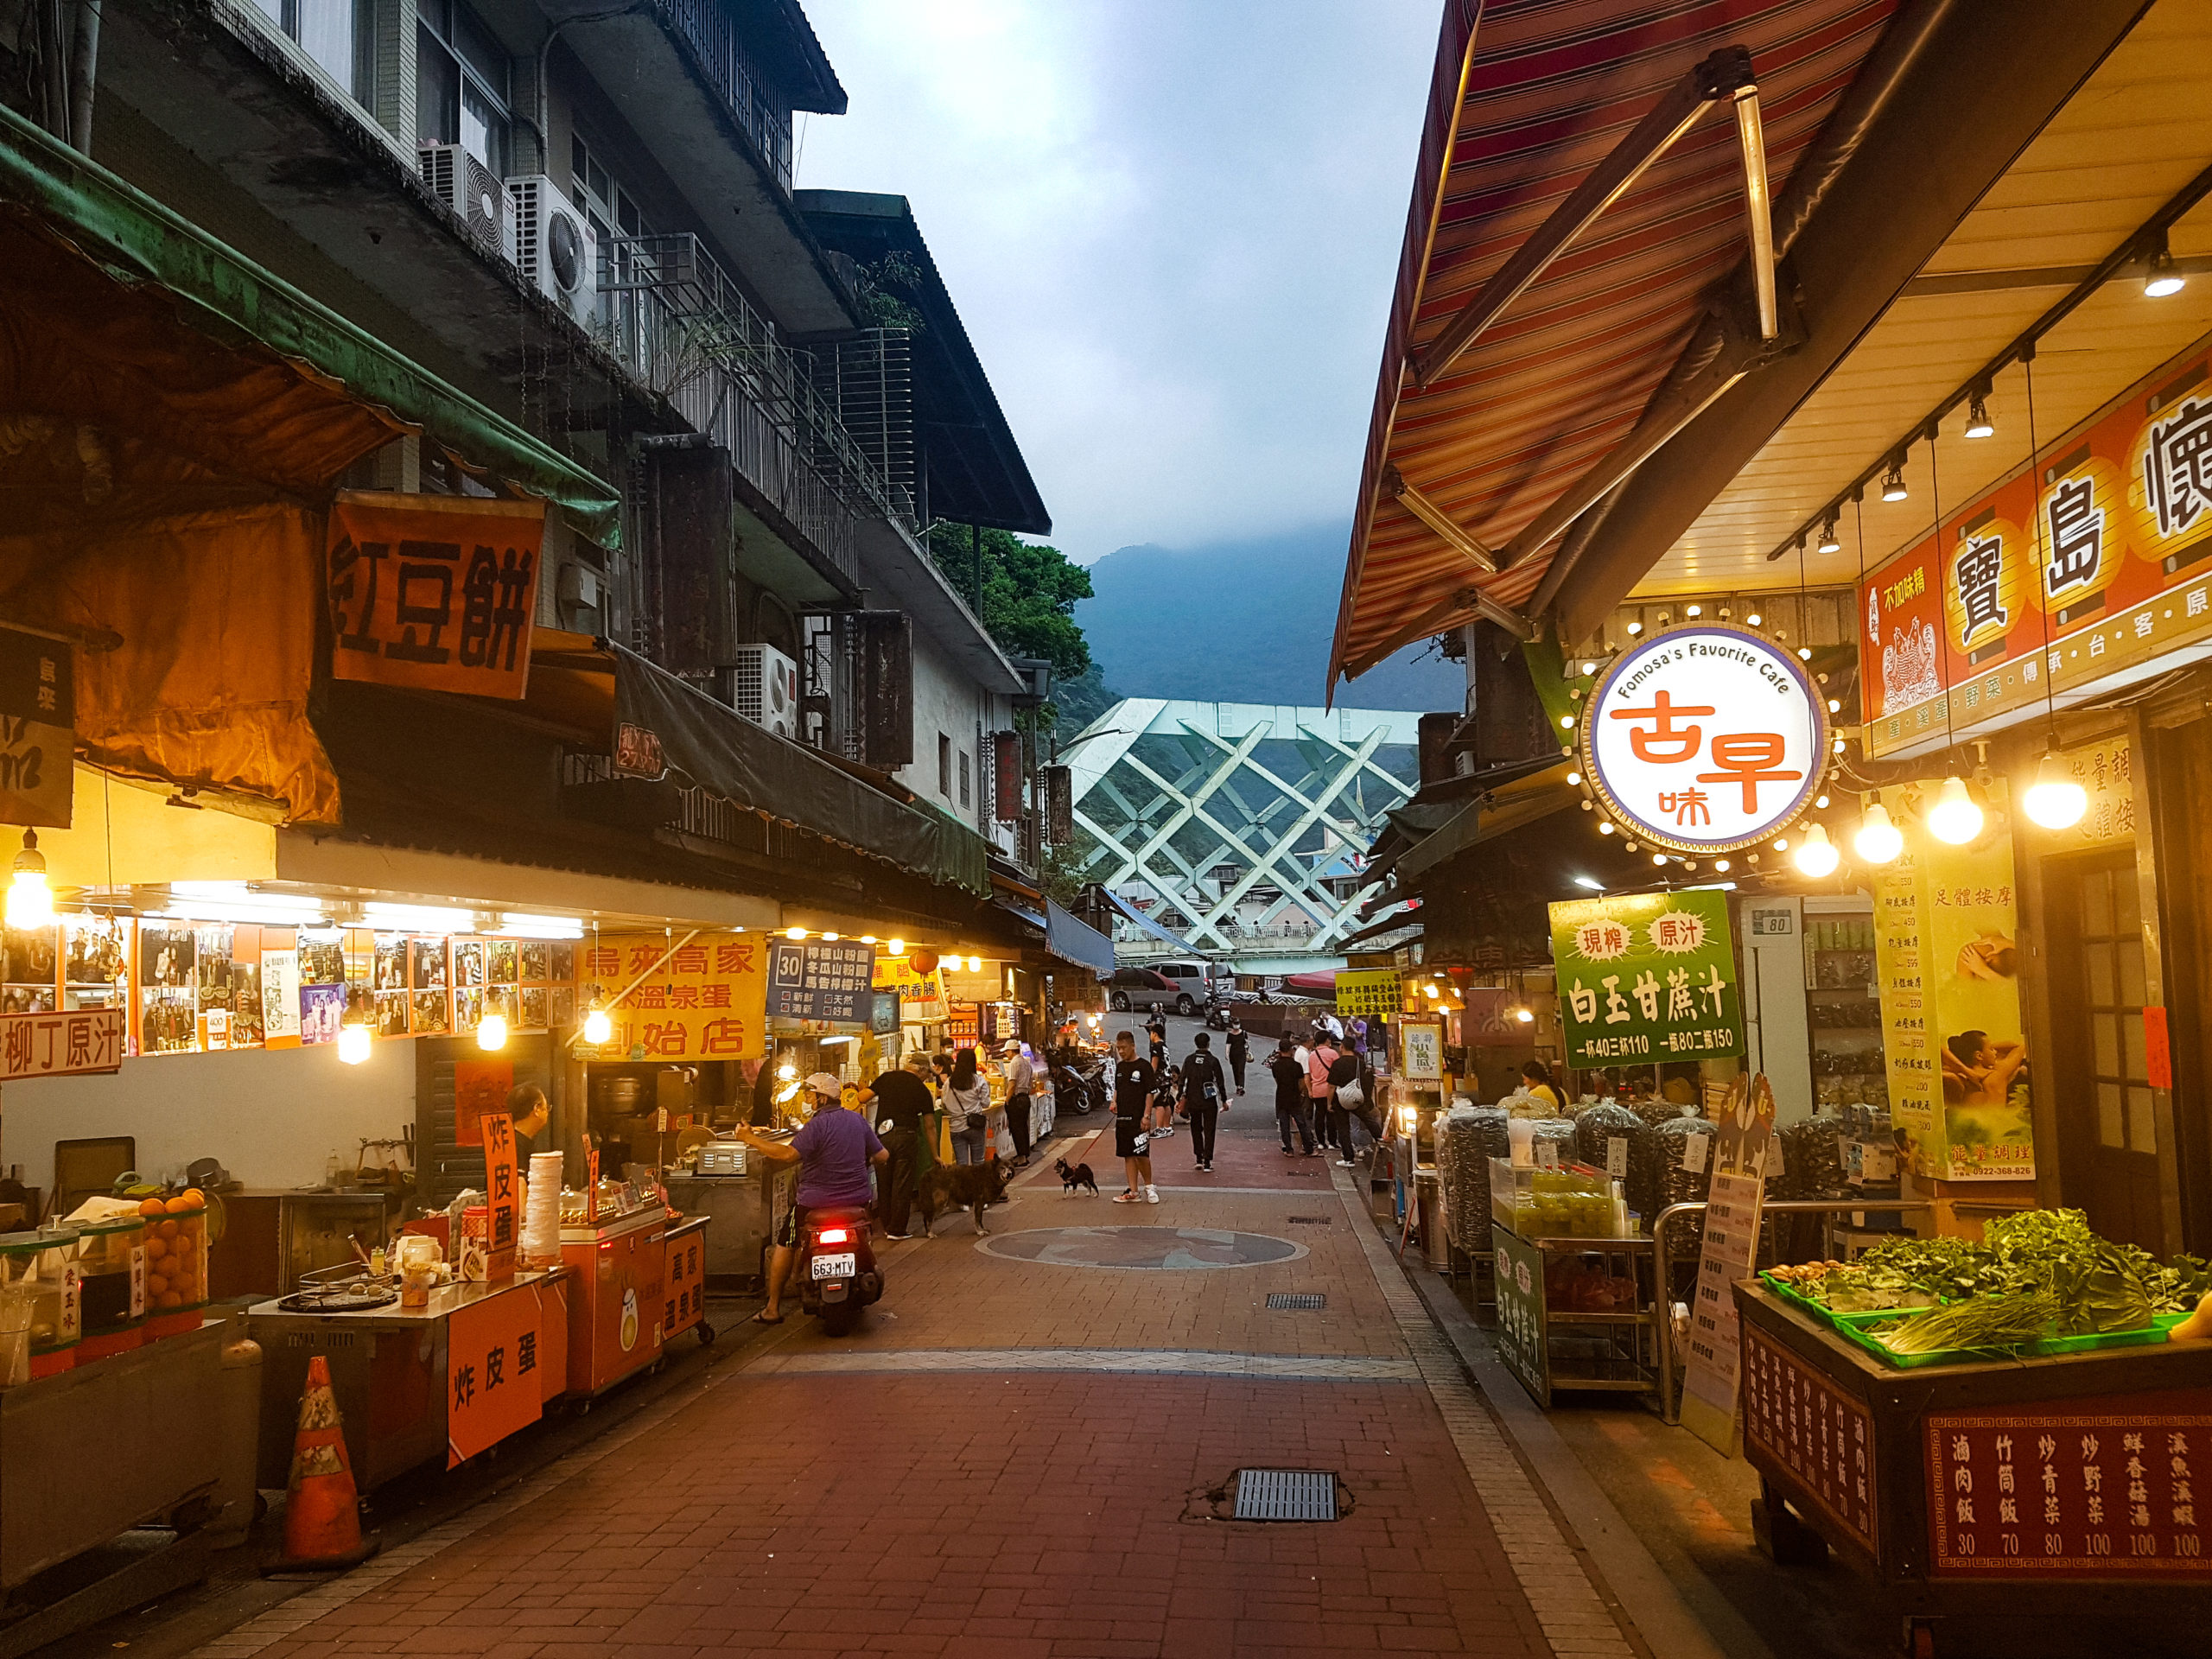 A bustling Asian street market at dusk, lit by warm orange street lighting.